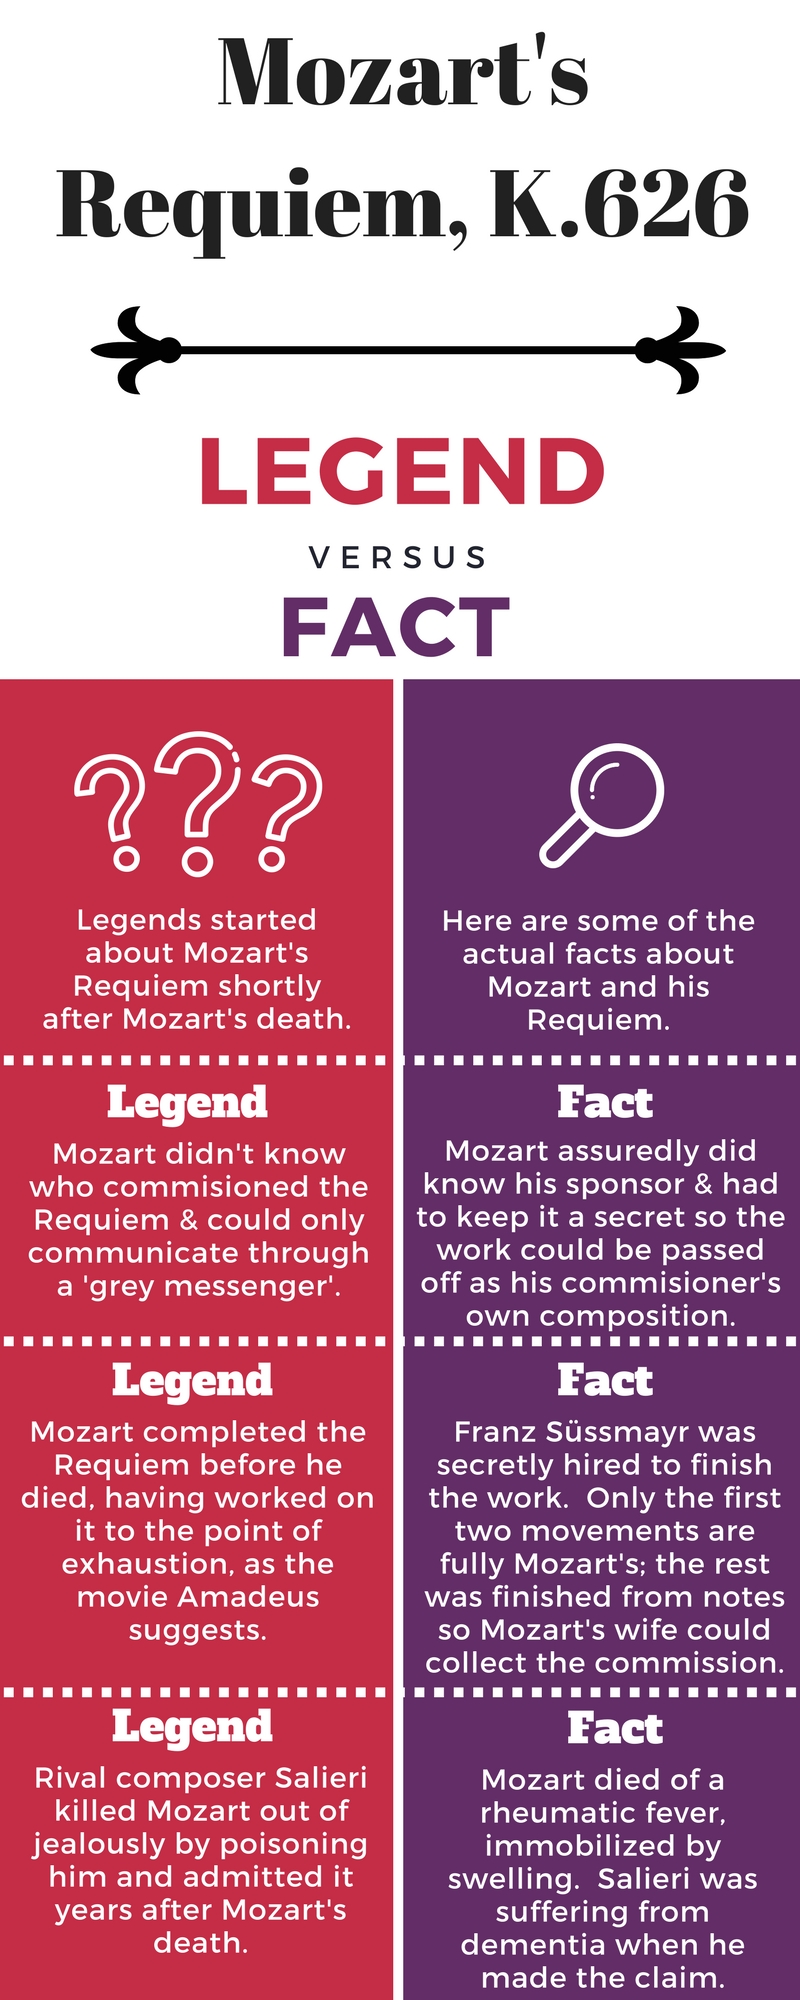 Requiem legend vs facts infographic